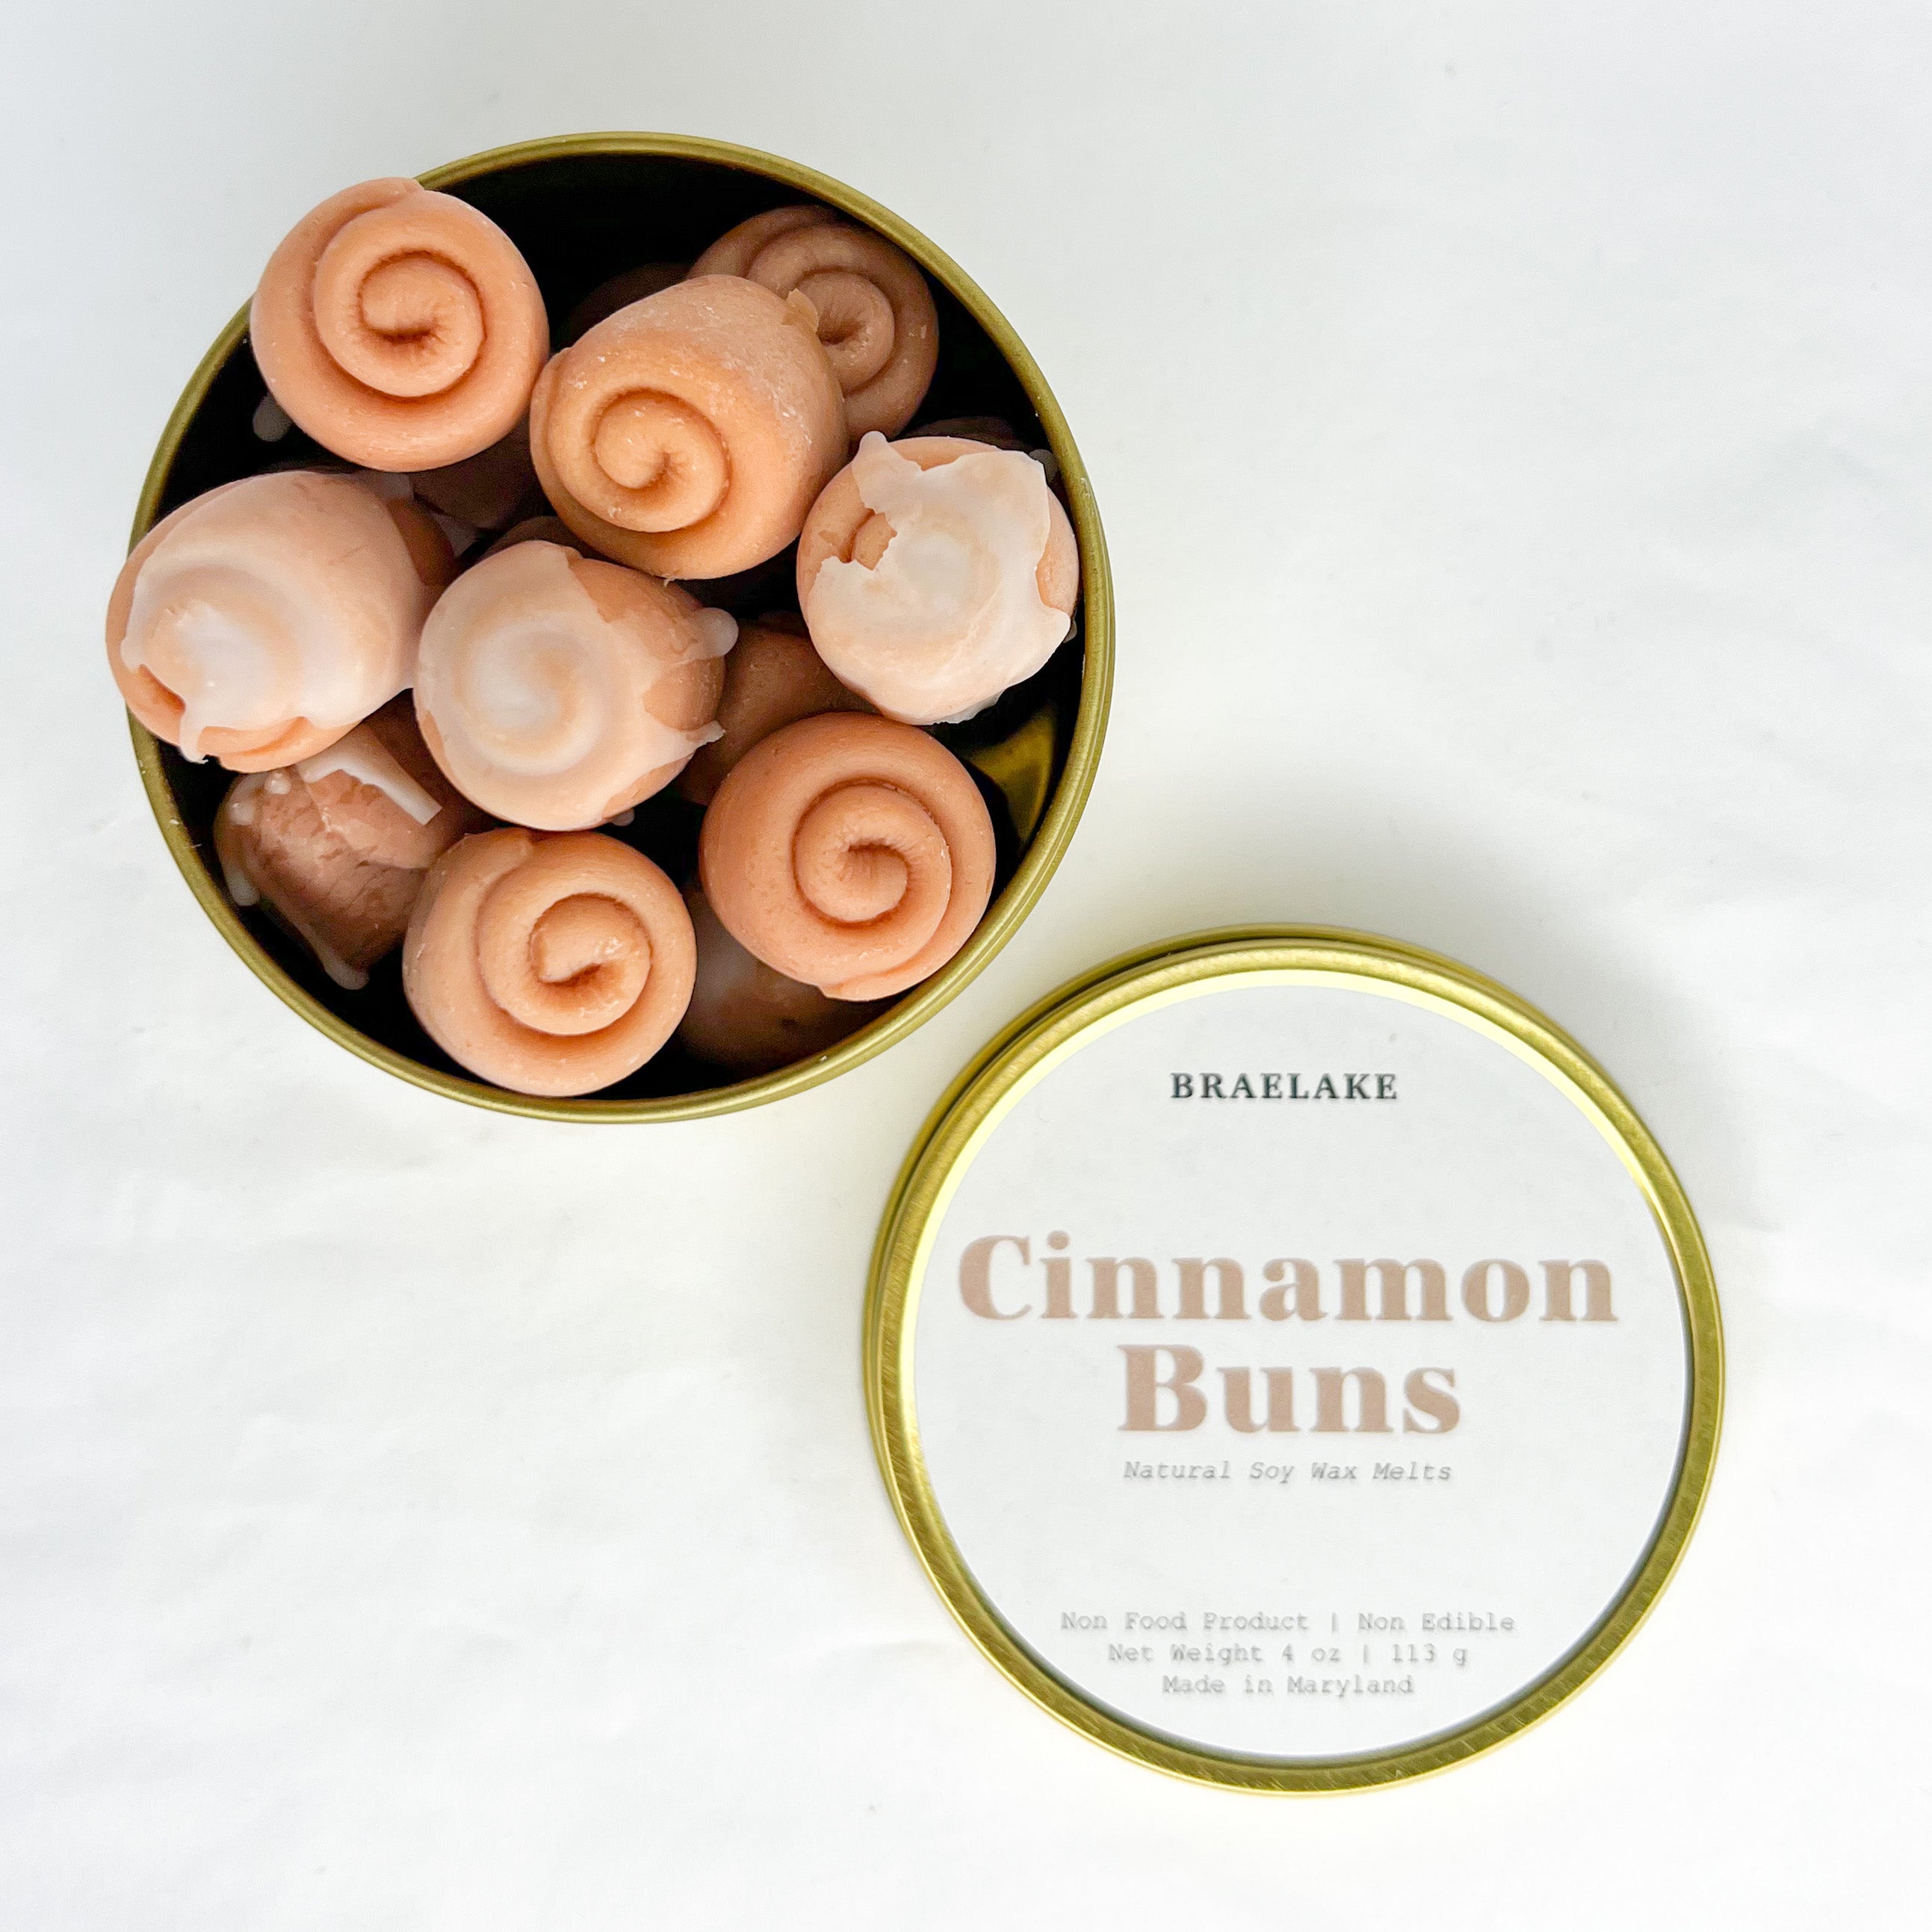 Cinnamon Buns Scented Wax Melts, ScentSationals, 2.5 oz (1 Pack) 